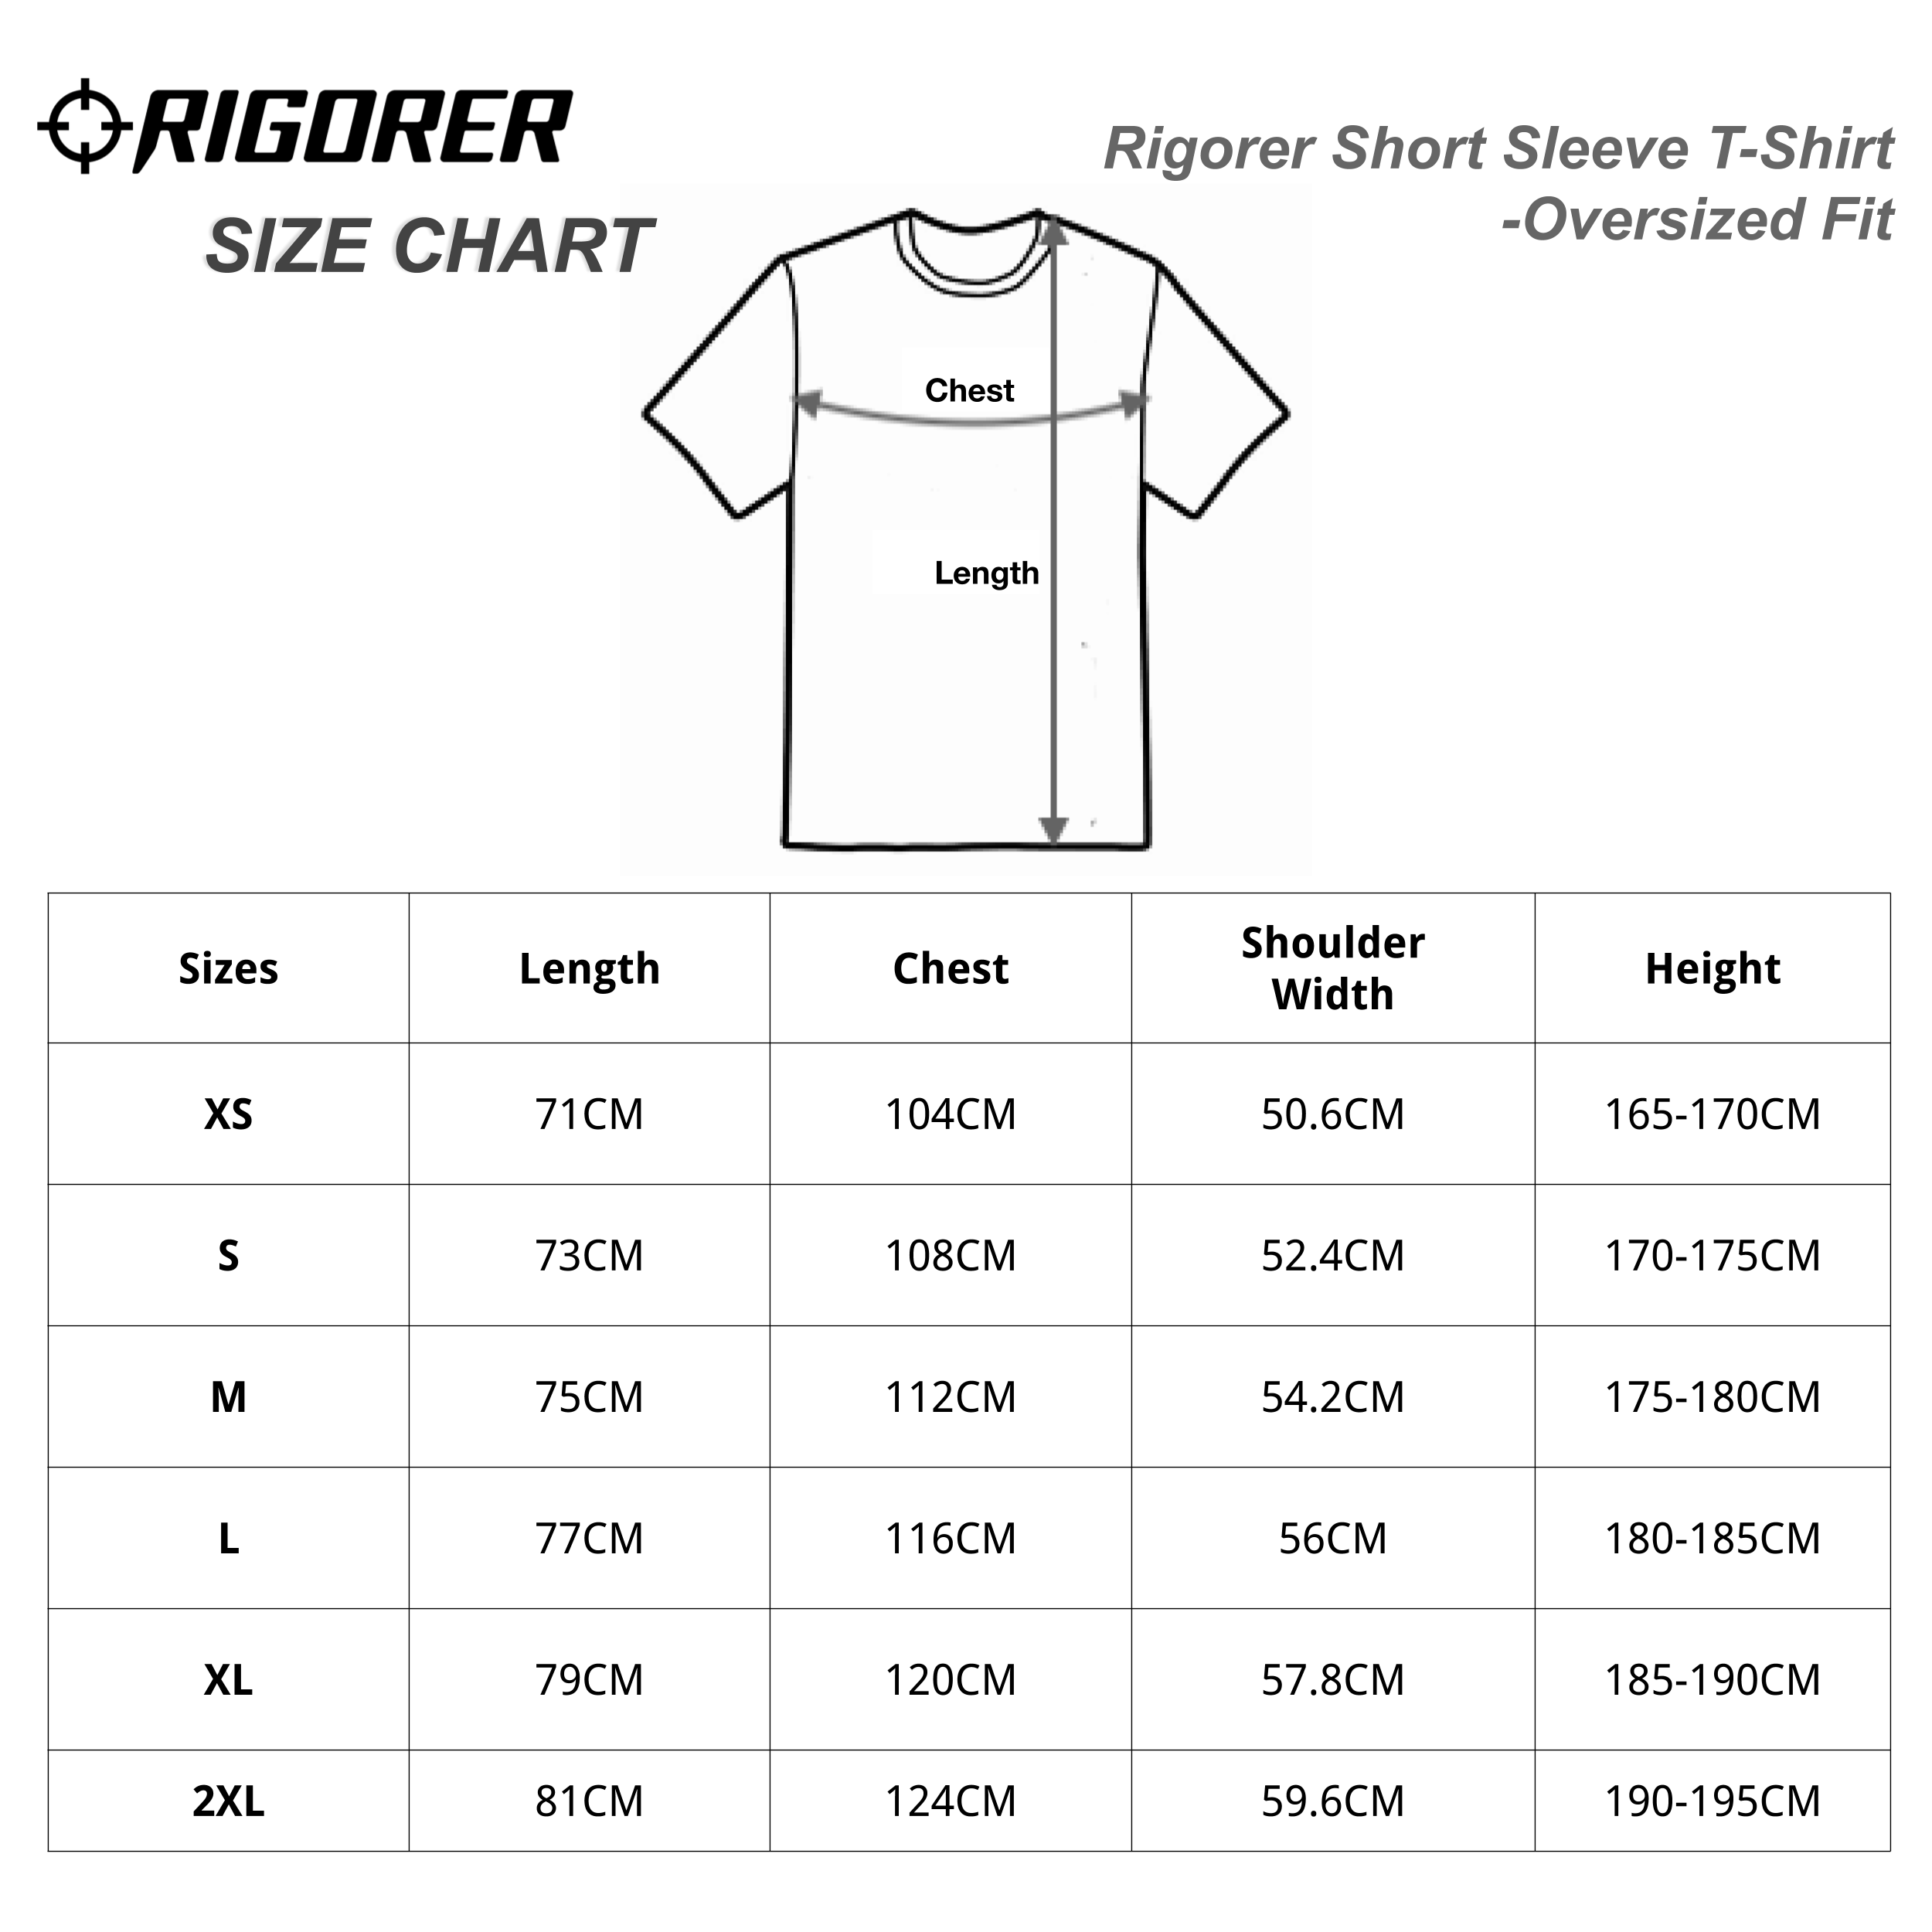 Rigorer Short Sleeve T-Shirt -Oversized Fit Sizing Chart